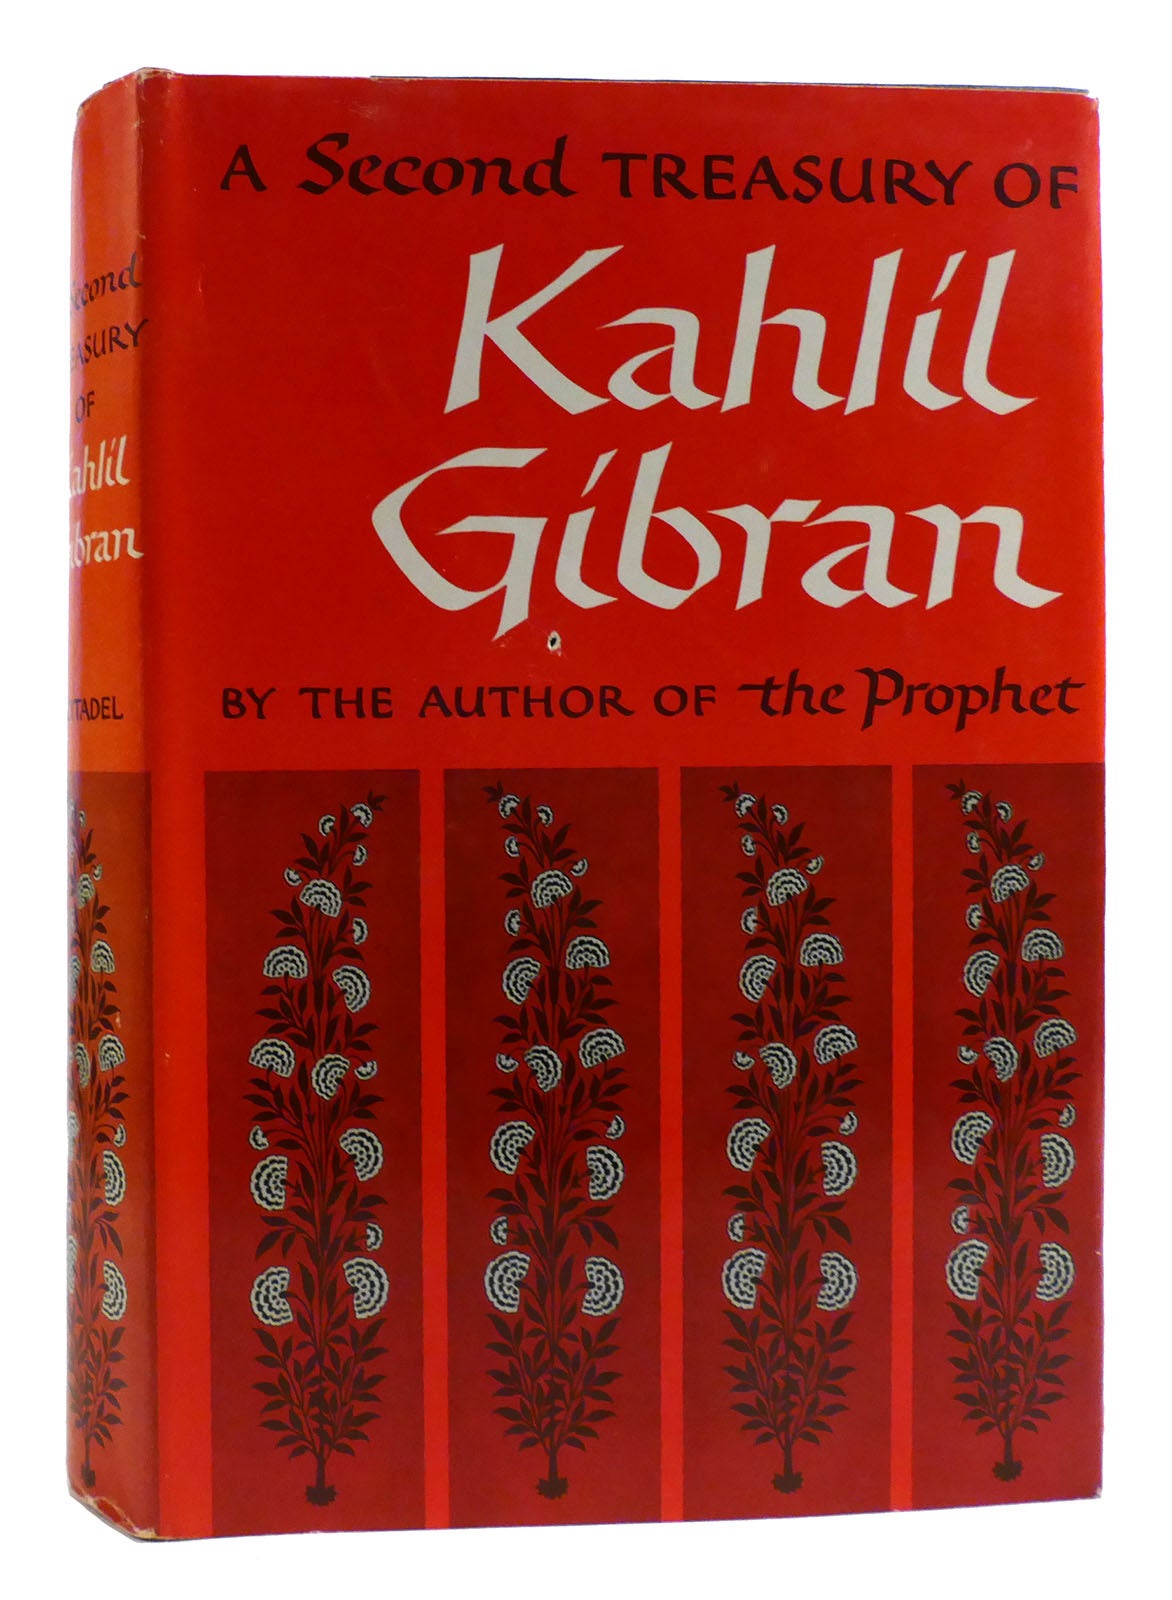 A SECOND TREASURY OF KAHLIL GIBRAN | Kahlil Gibran | Book Club Edition